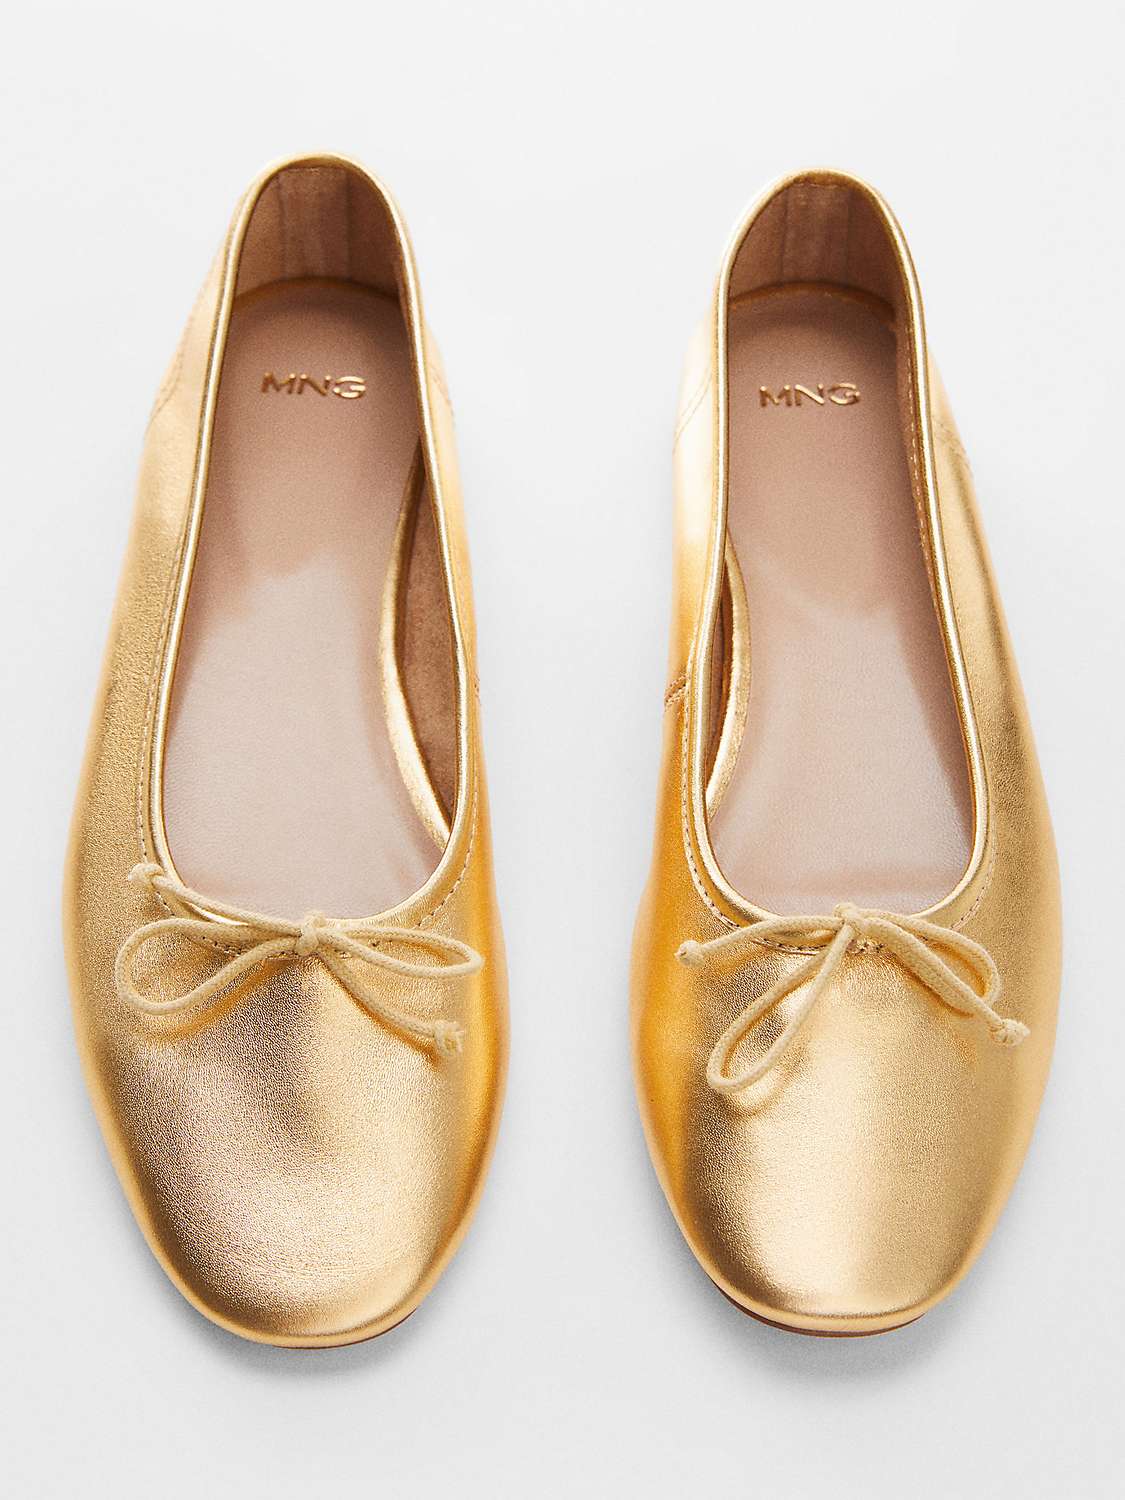 Mango Baila Bow Leather Ballerina Shoes, Gold at John Lewis & Partners